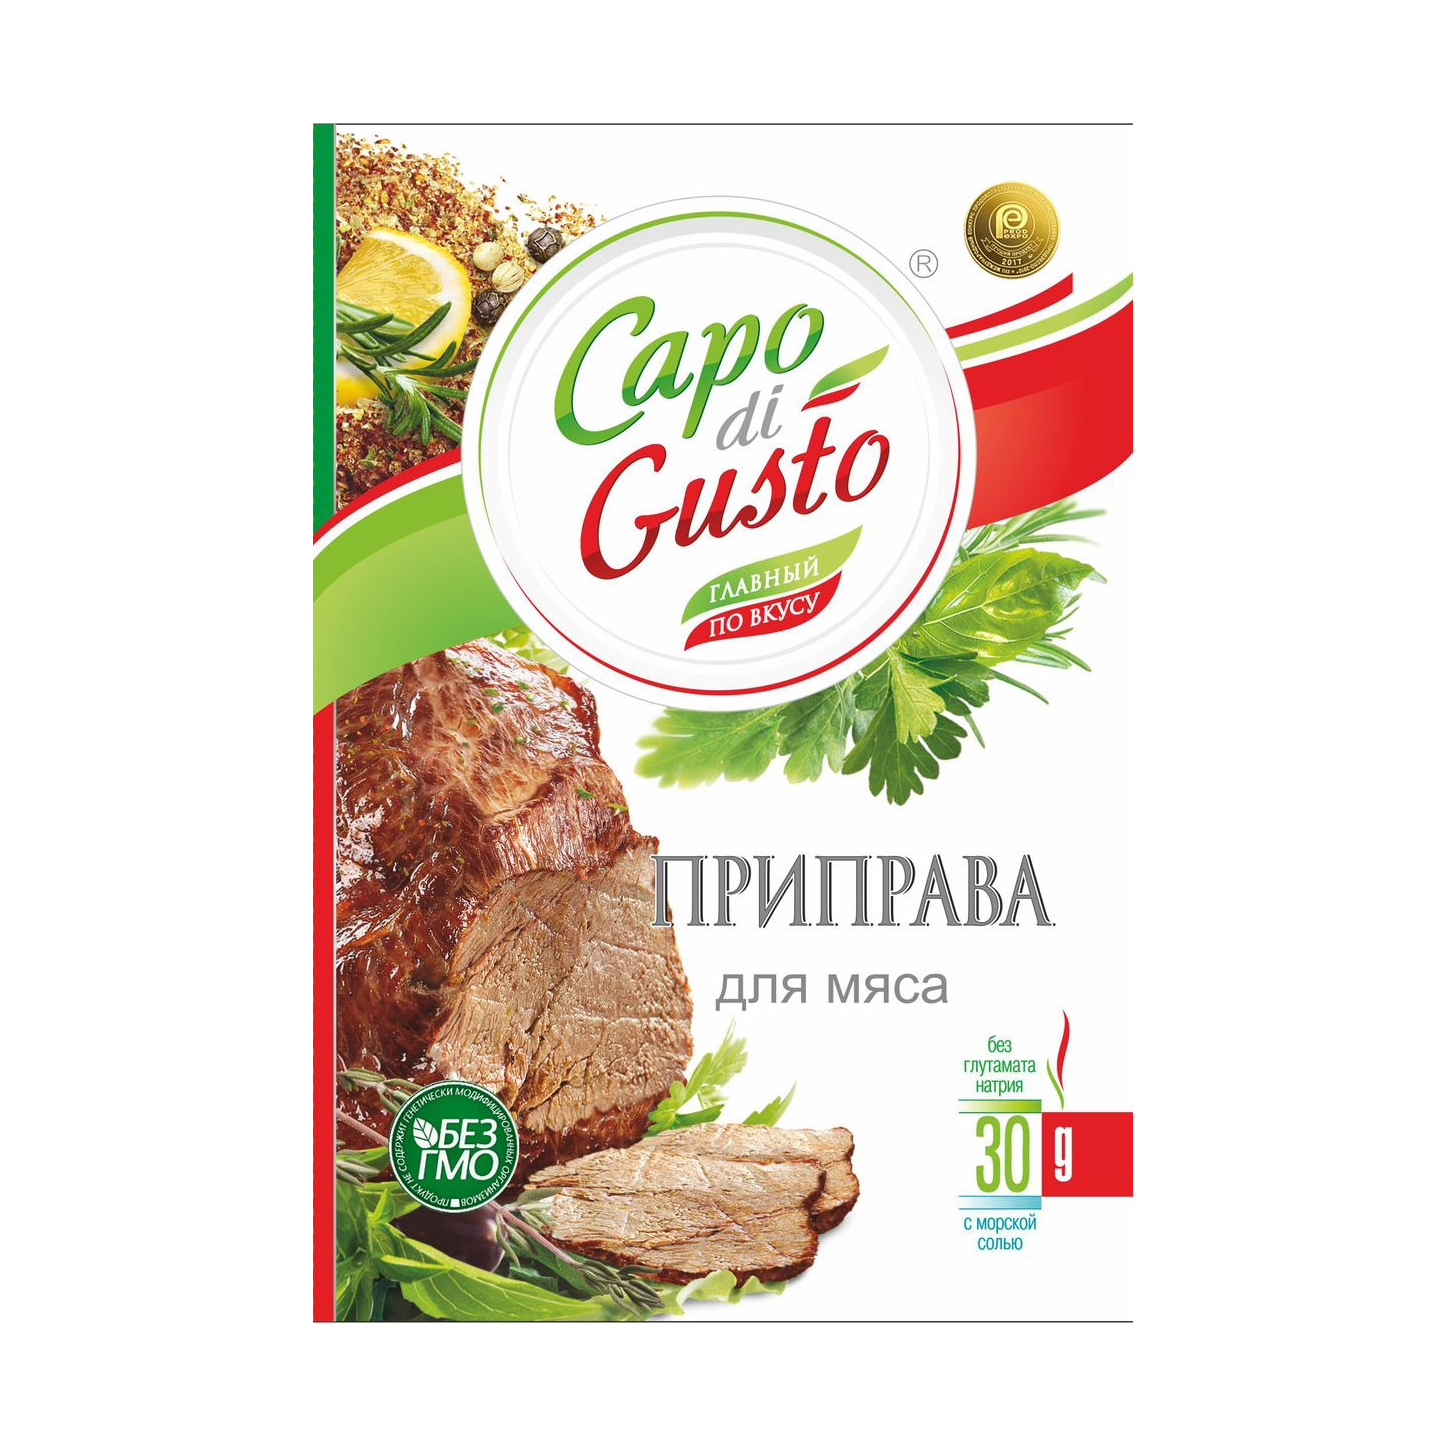 Приправа Capo di Gusto для мяса 30 г базилик мариан